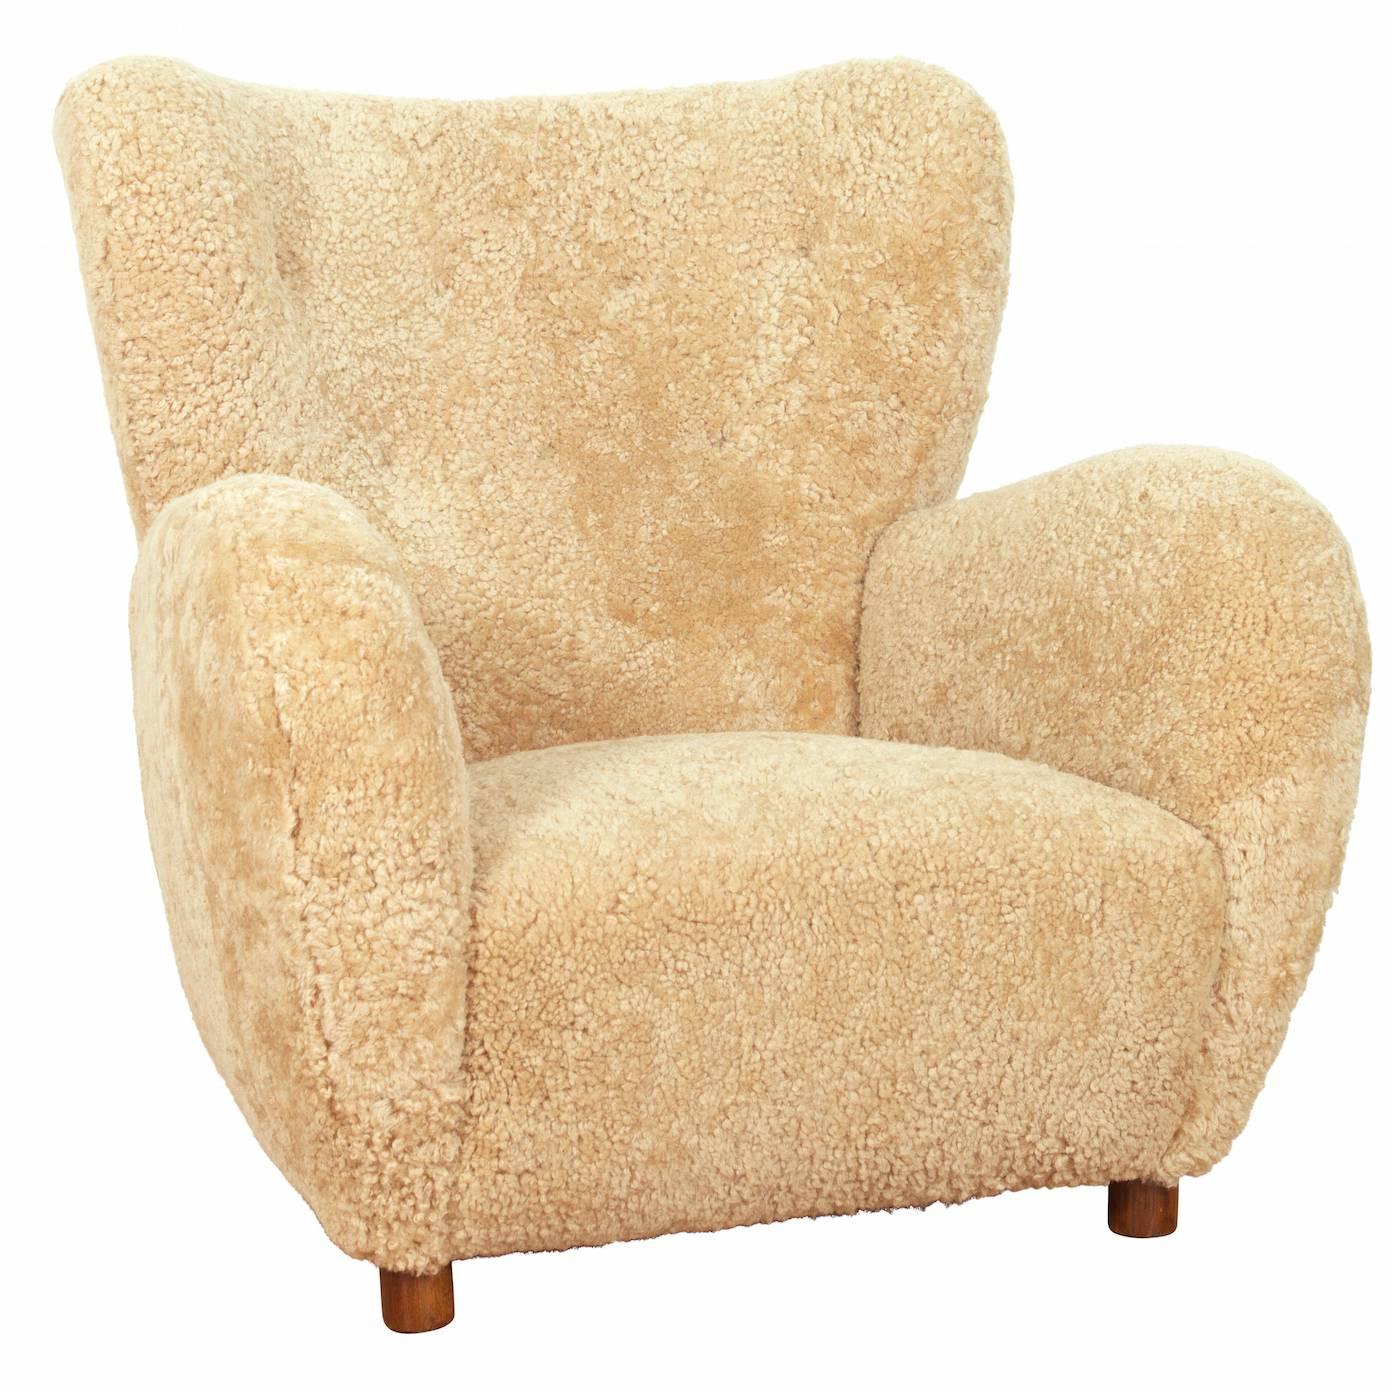 Flemming Lassen Lounge Chair